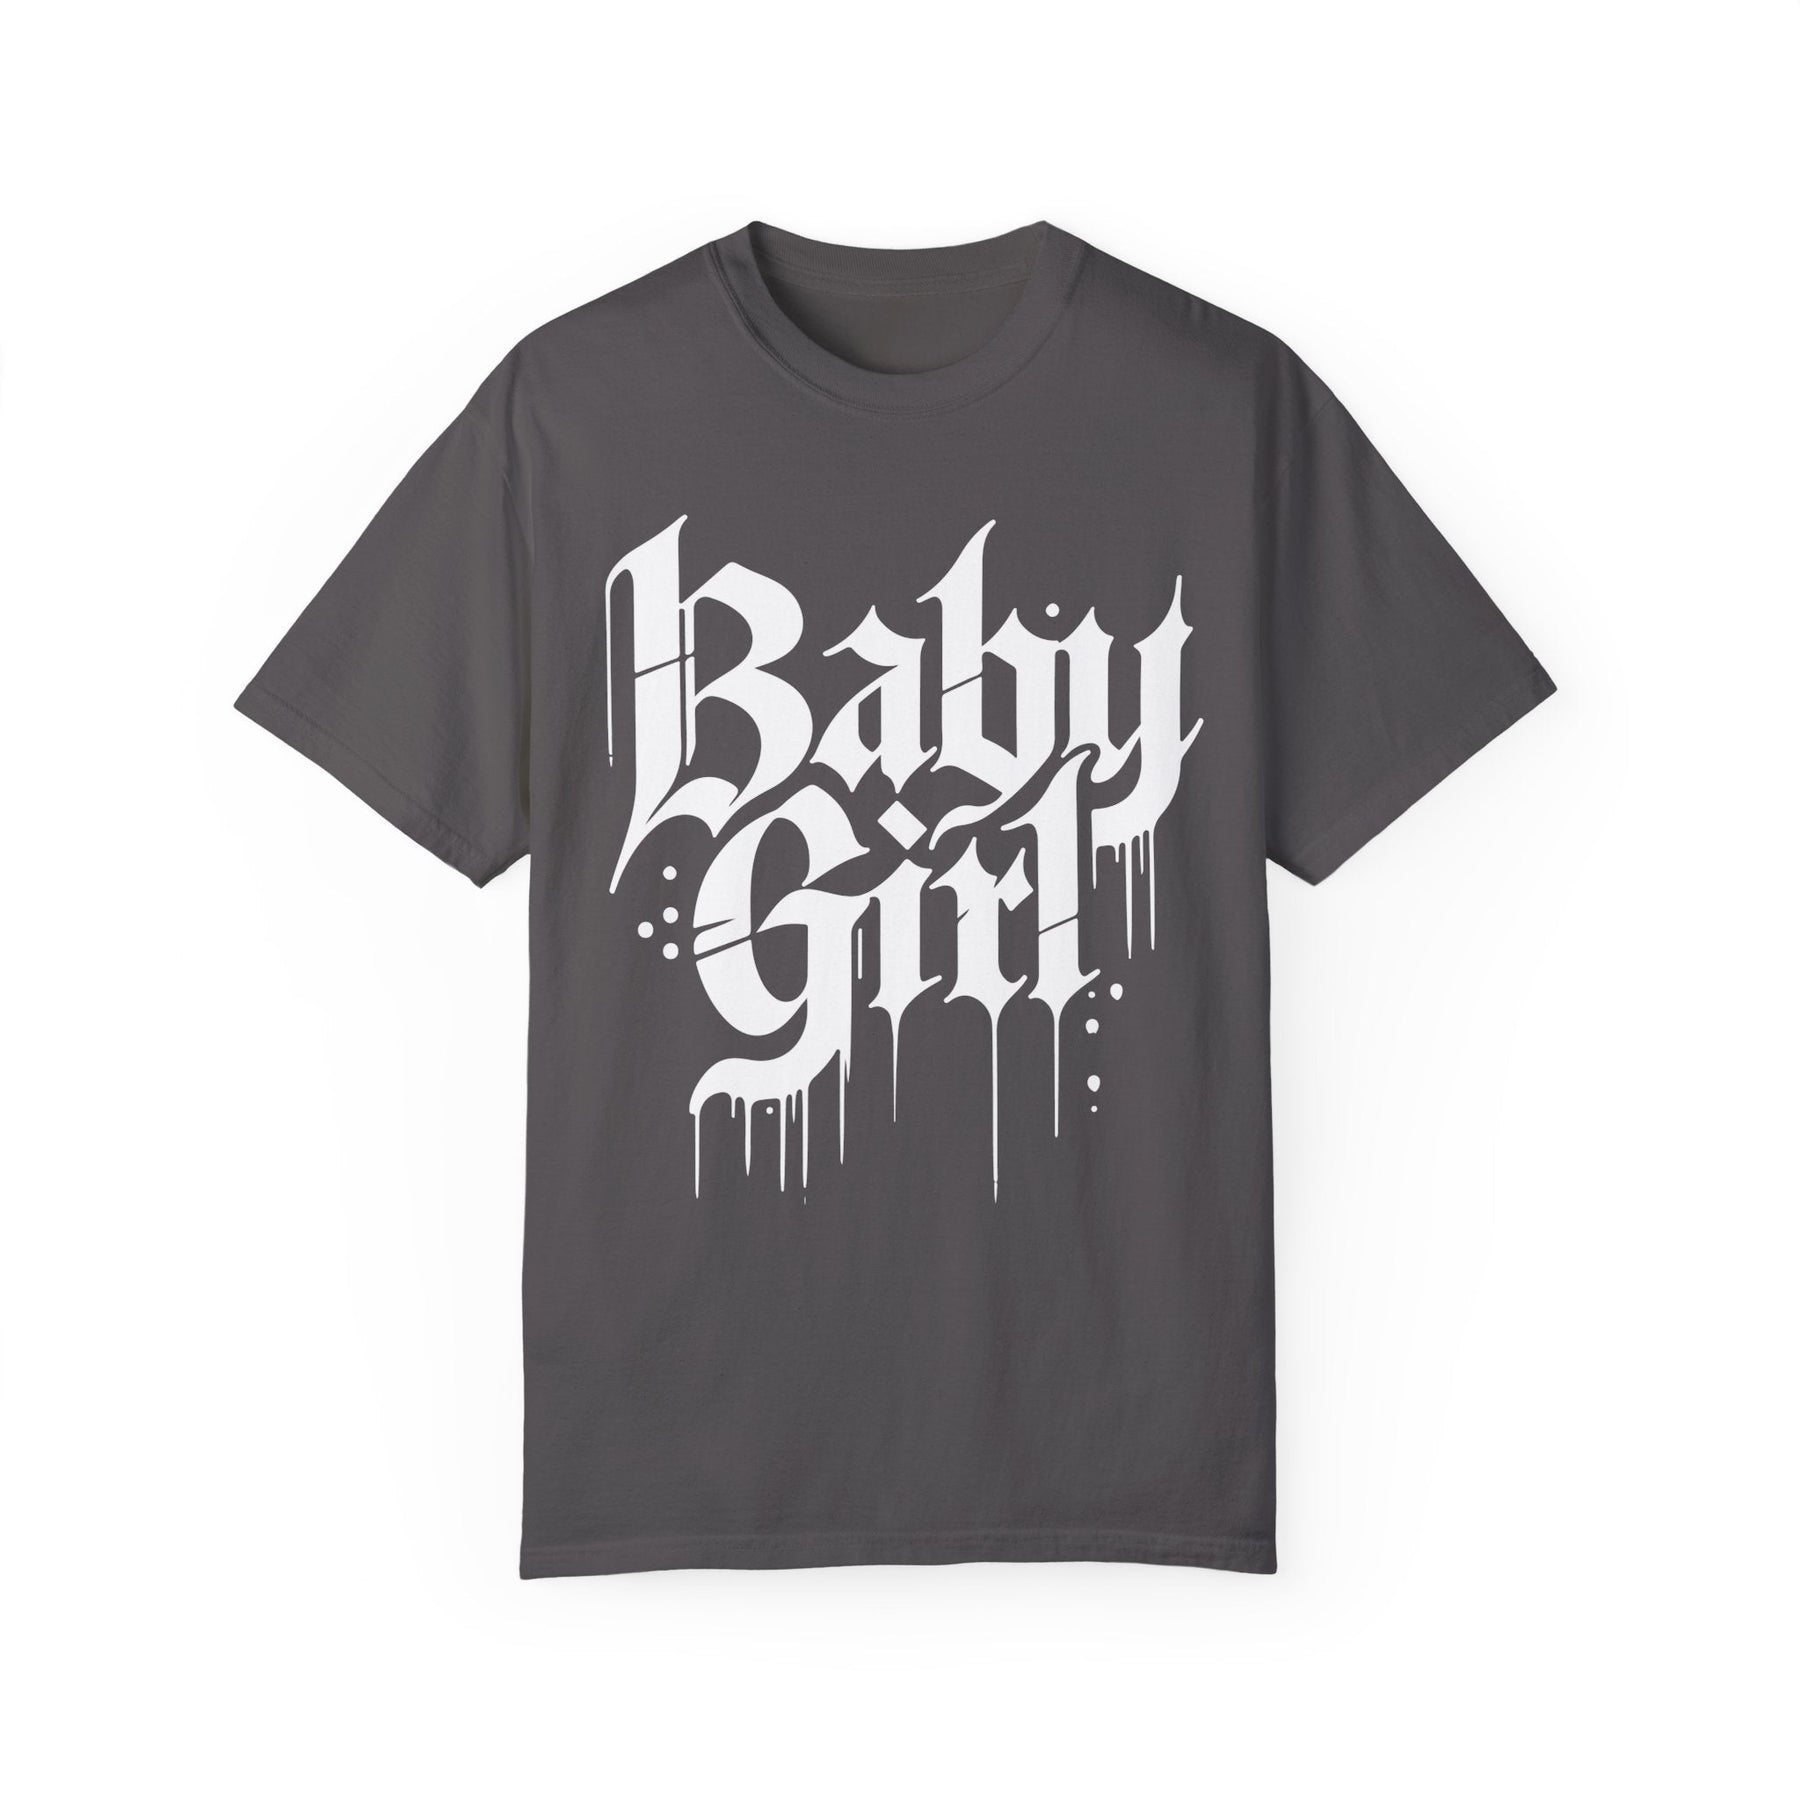 Baby Girl Comfort Tee - Goth Cloth Co.T - Shirt18836622349592561374